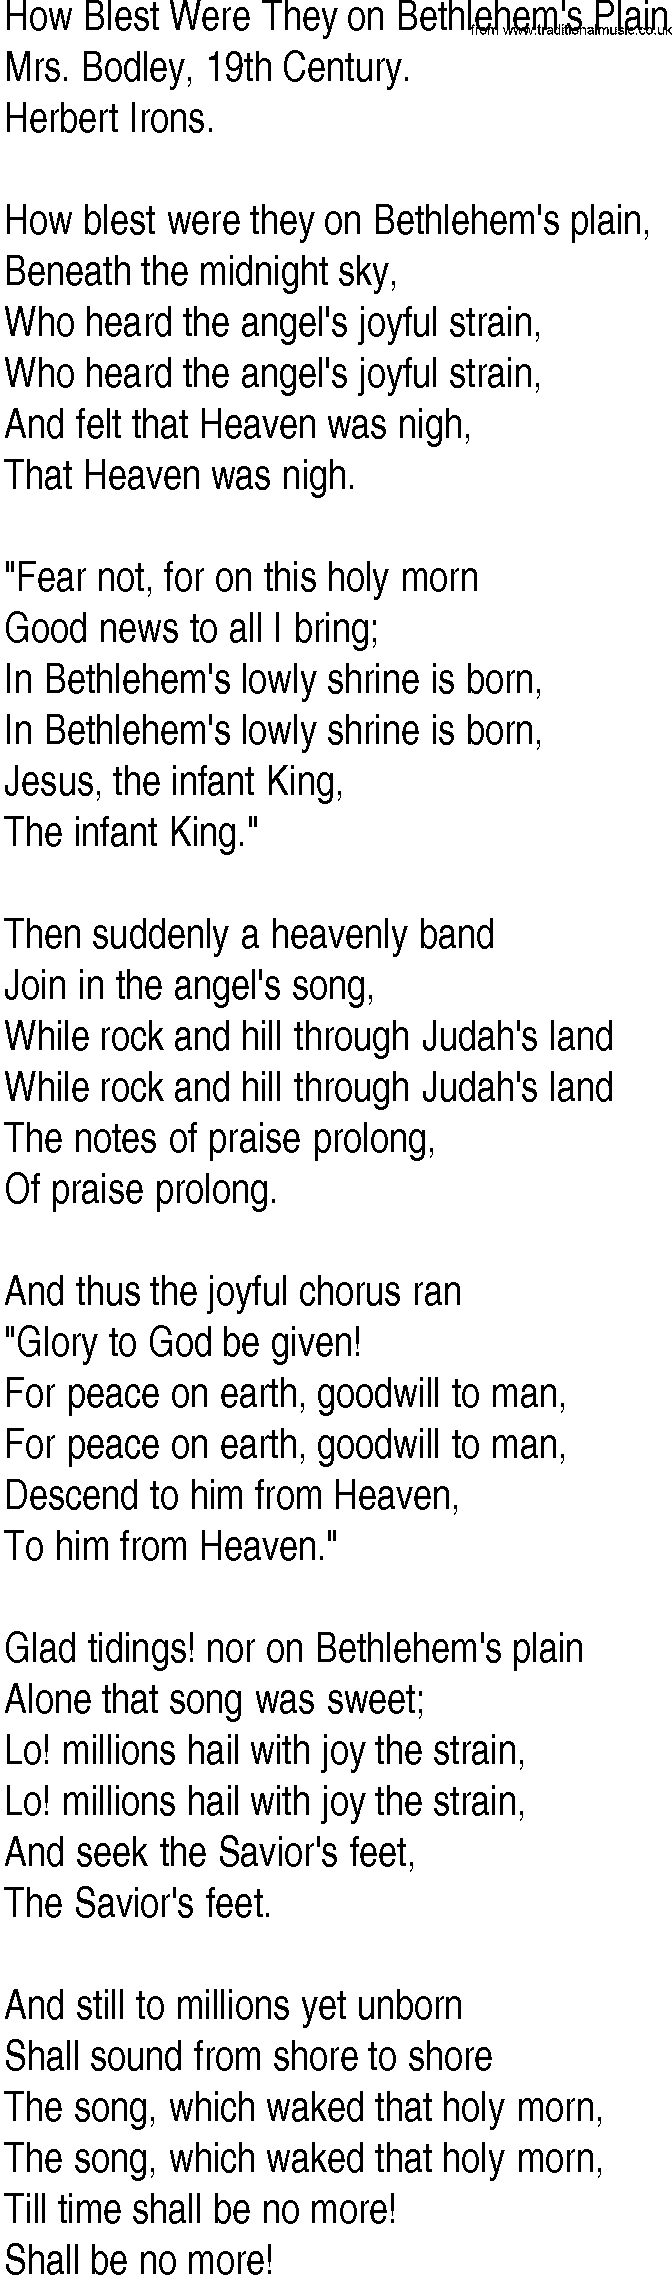 Hymn and Gospel Song: How Blest Were They on Bethlehem's Plain by Mrs Bodley th Century lyrics